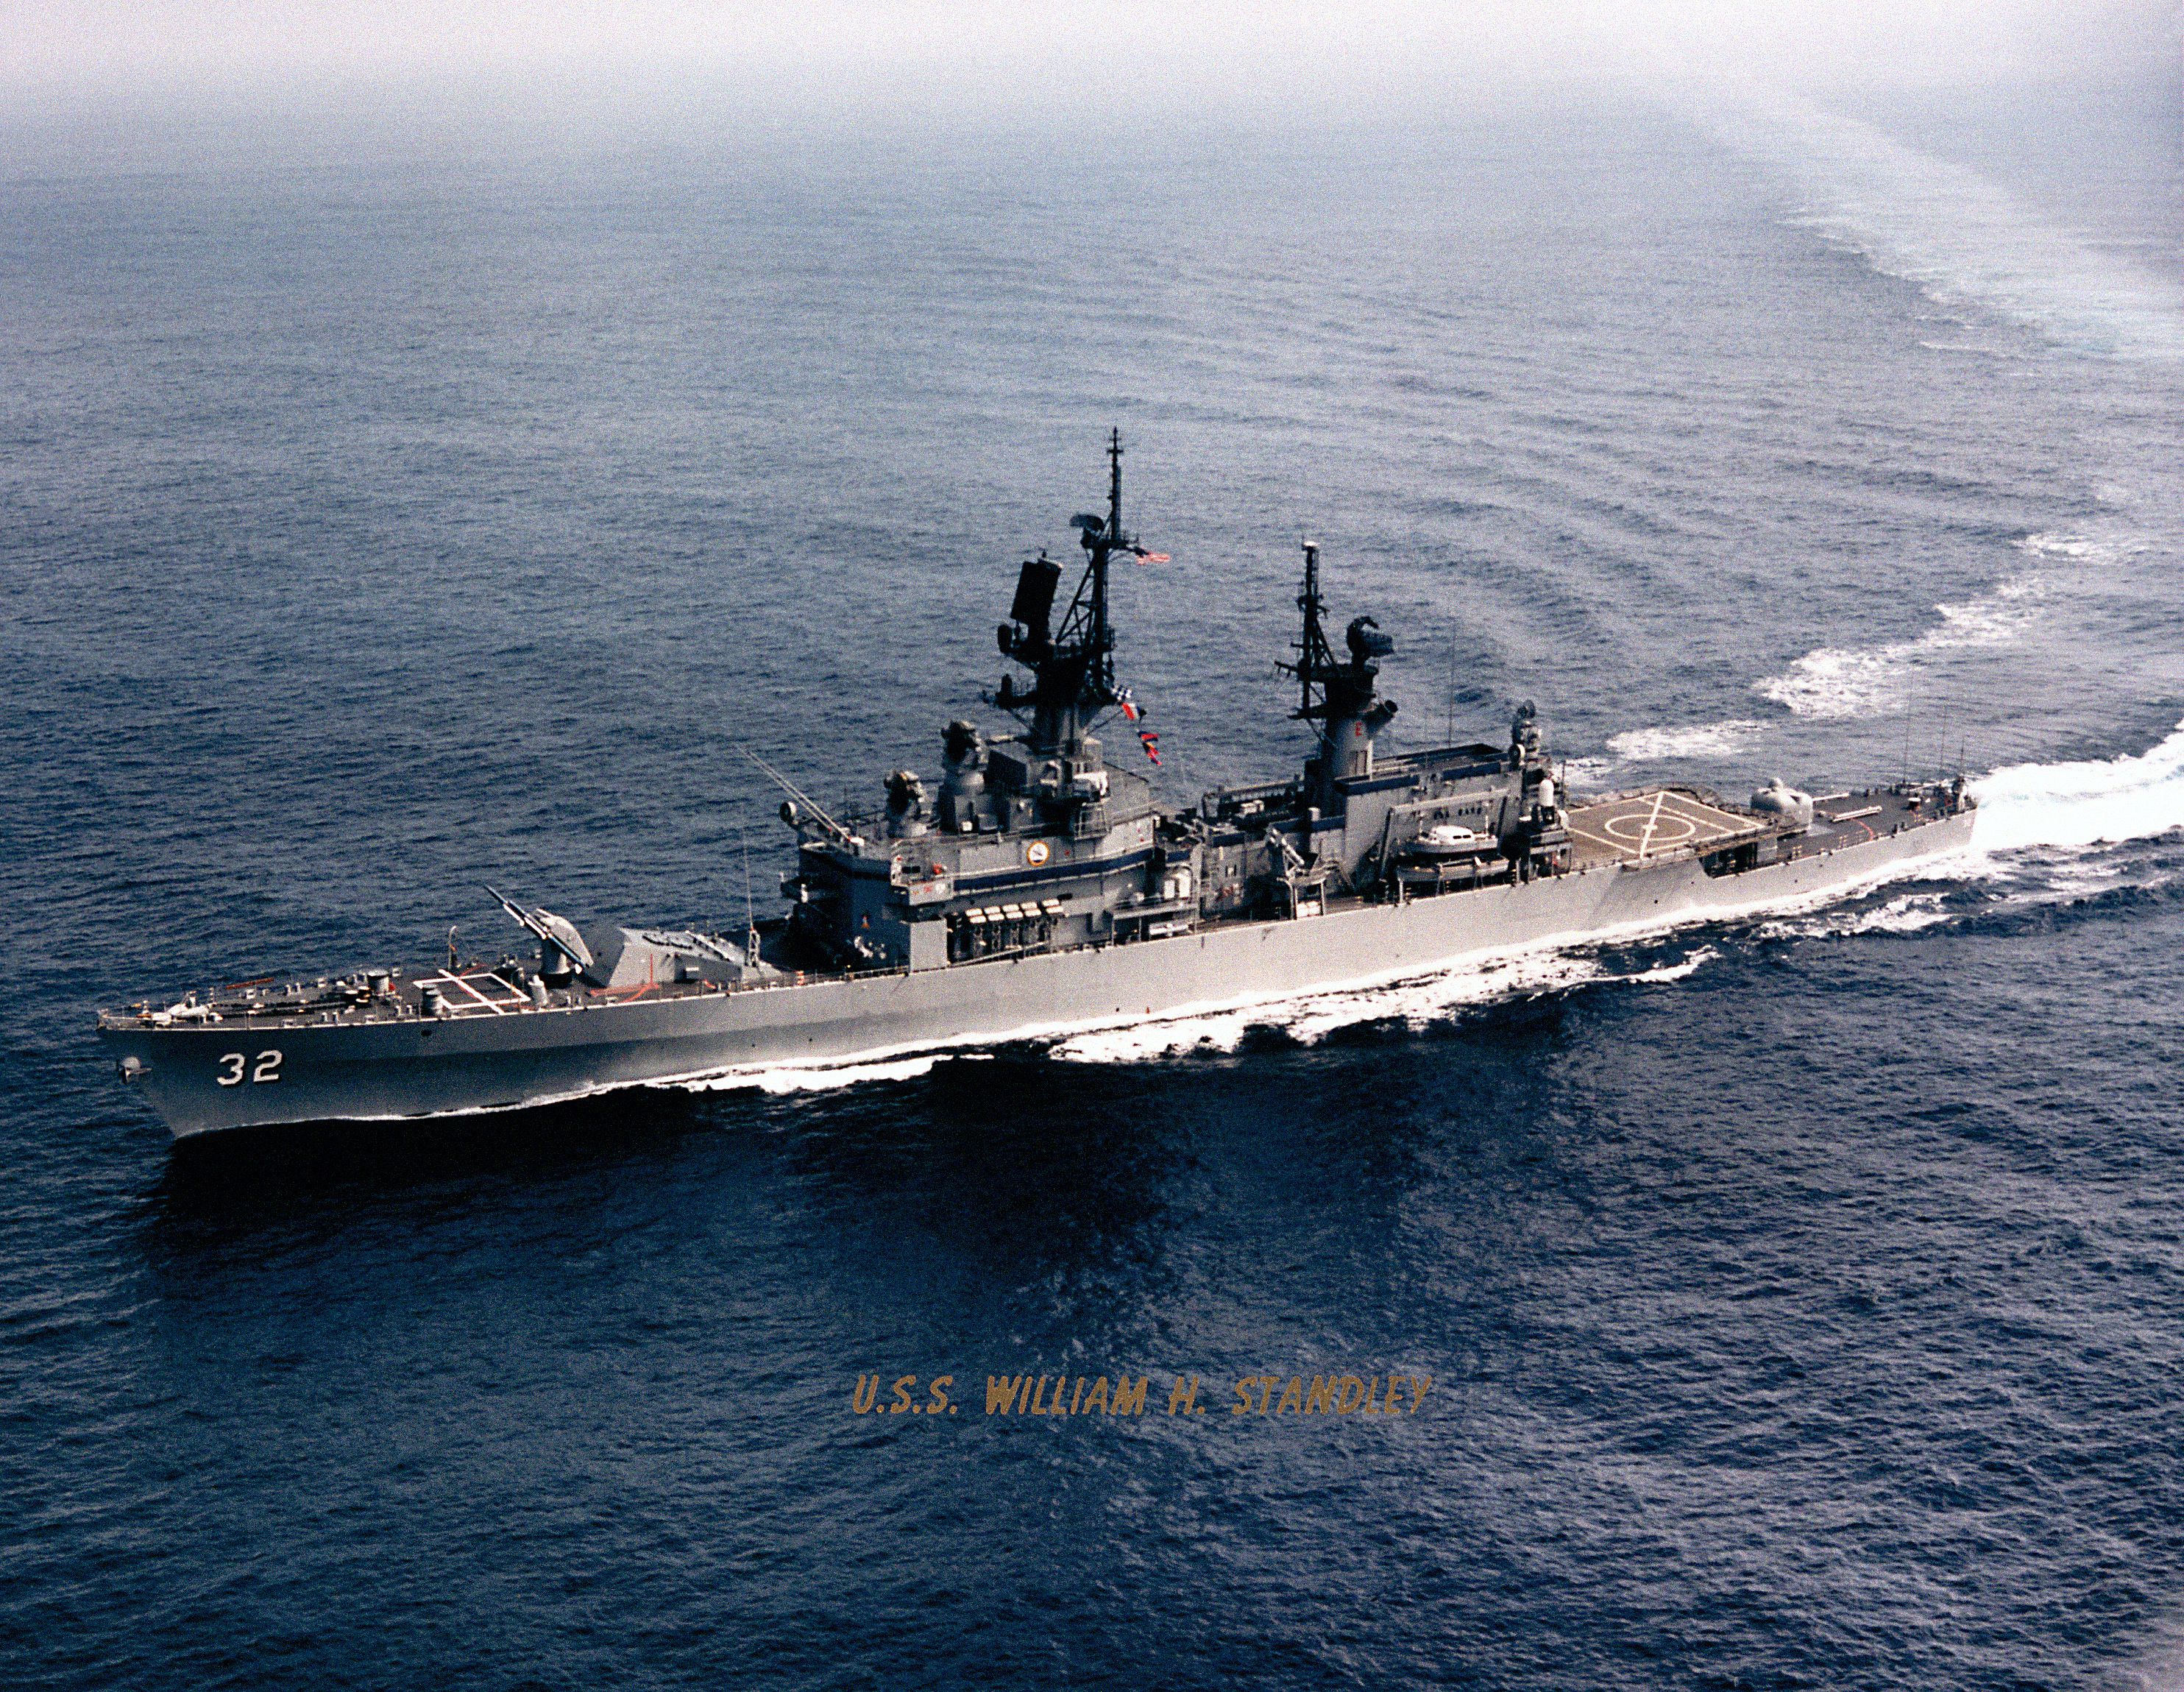 USS WILLIAM H STANDLEY CG 32 Naval Ship Photo Print USN Navy 